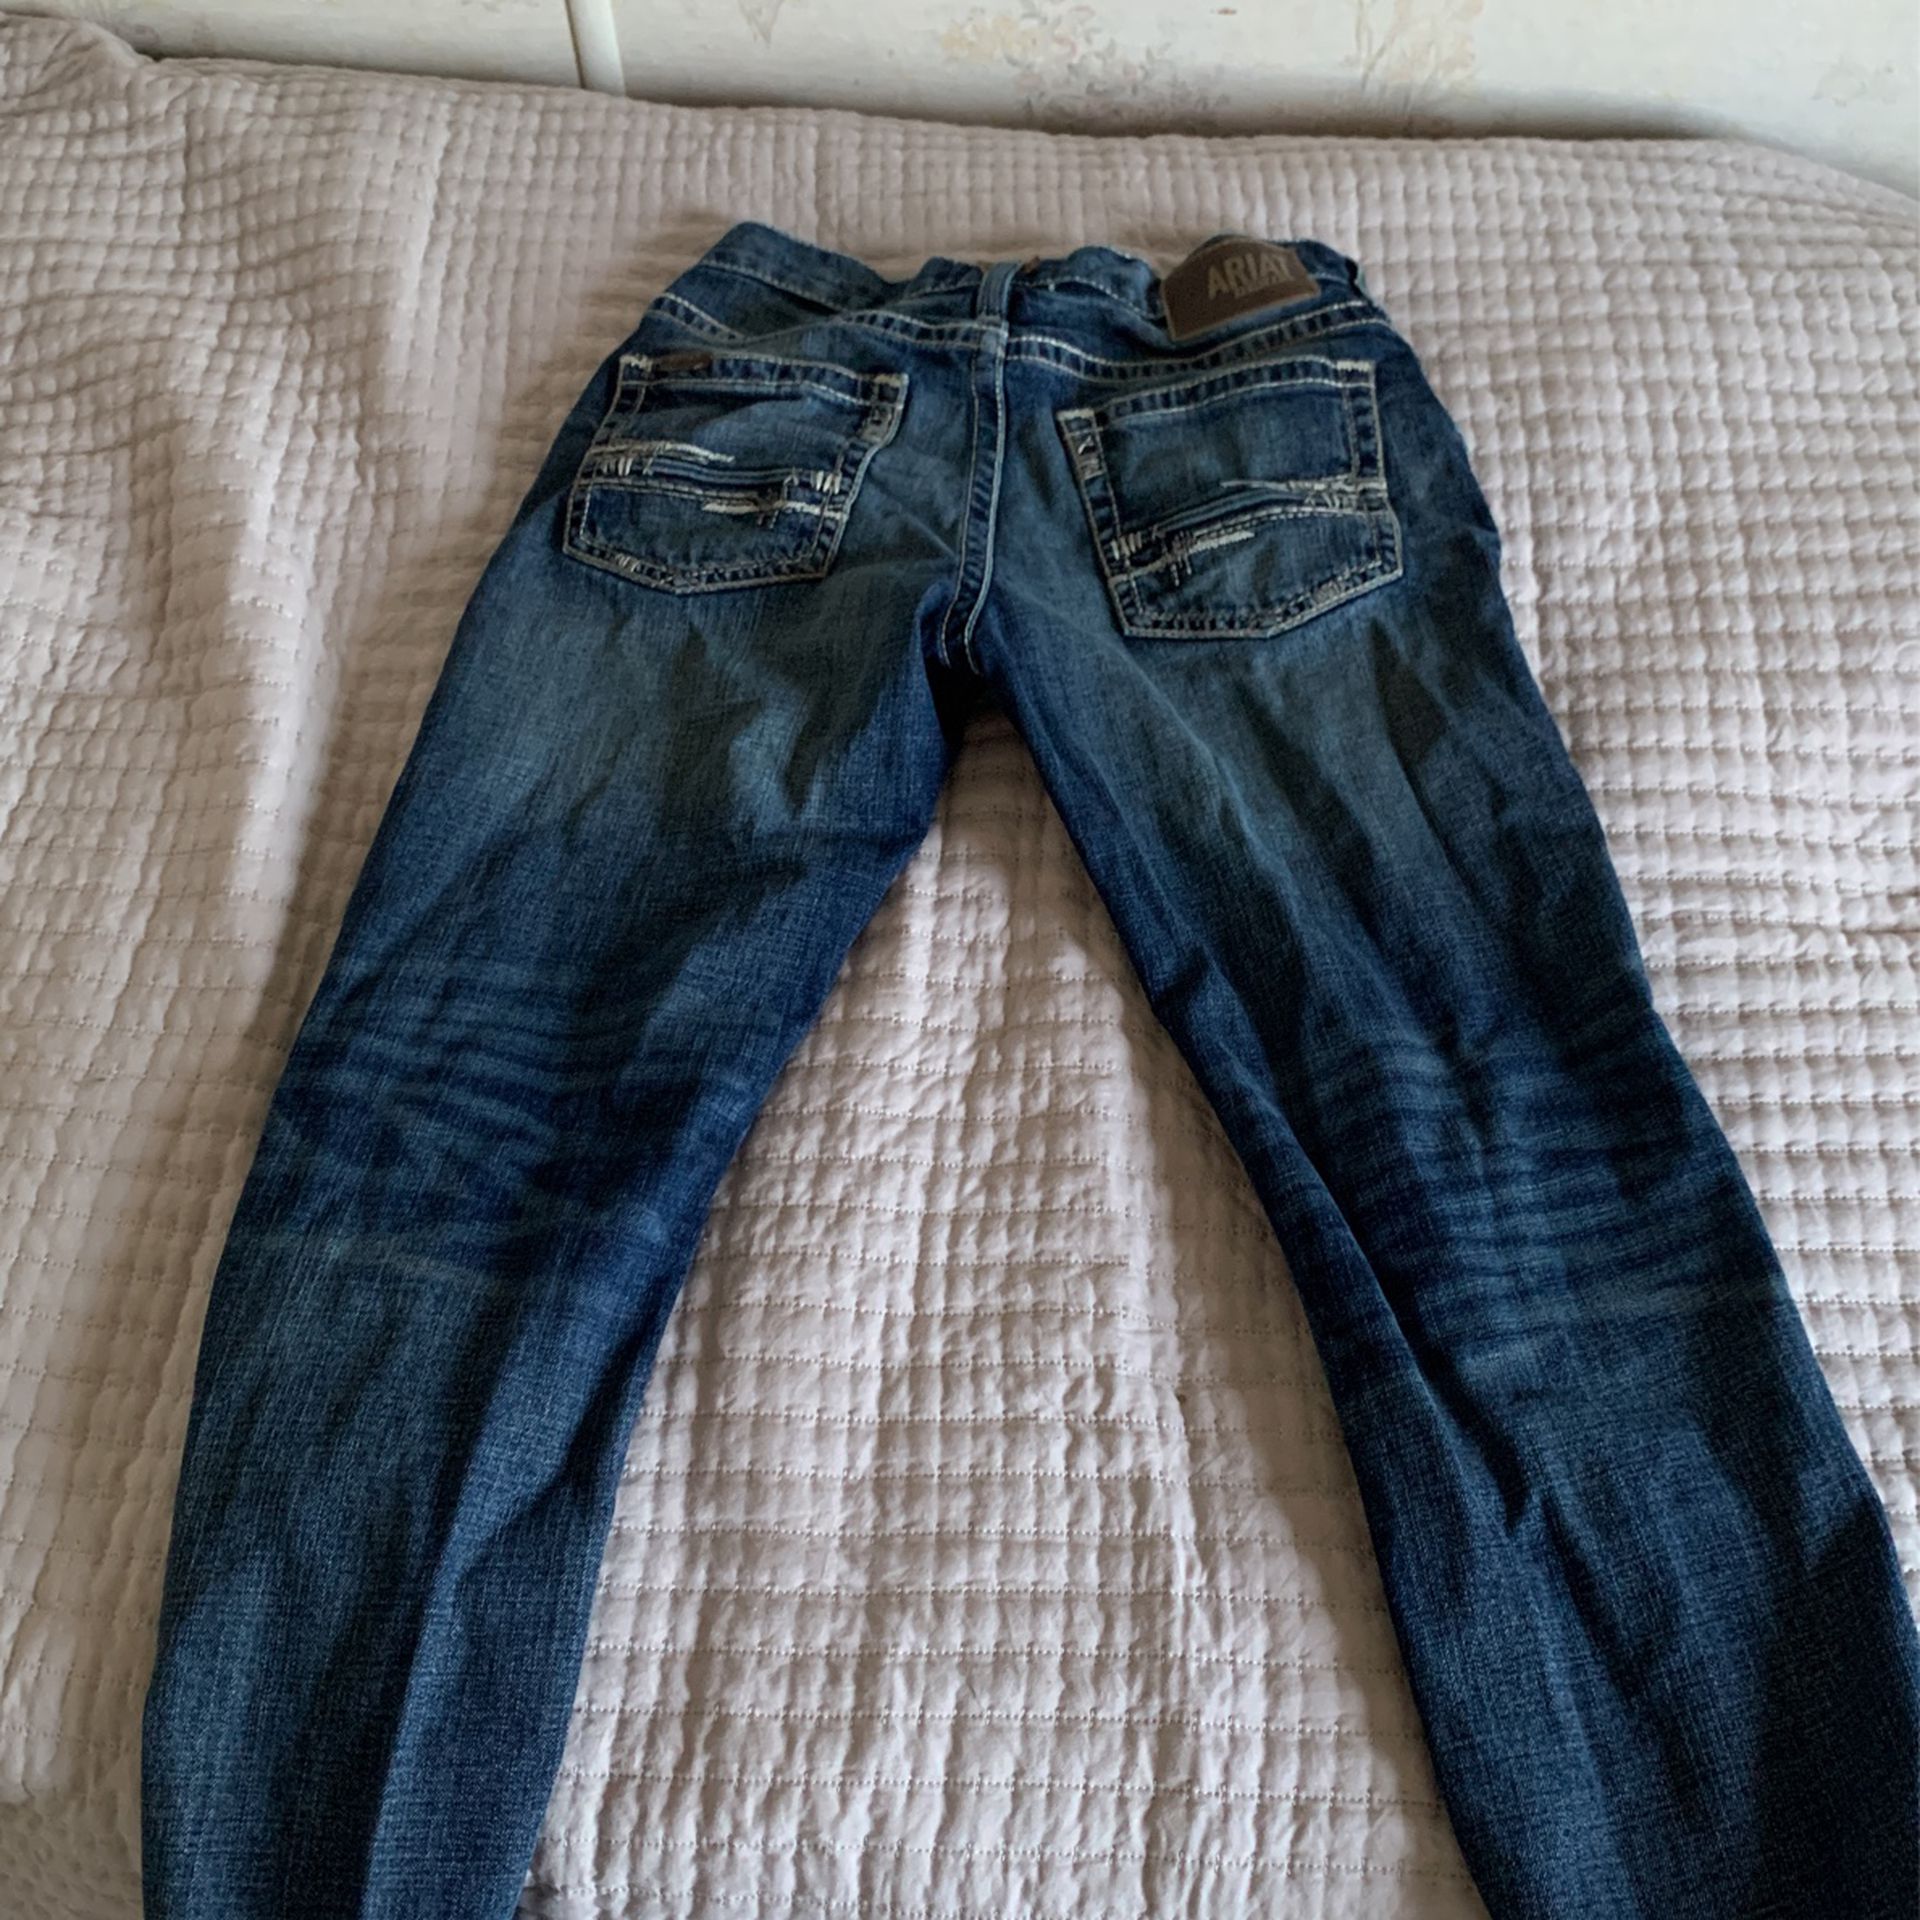  ariot jeans